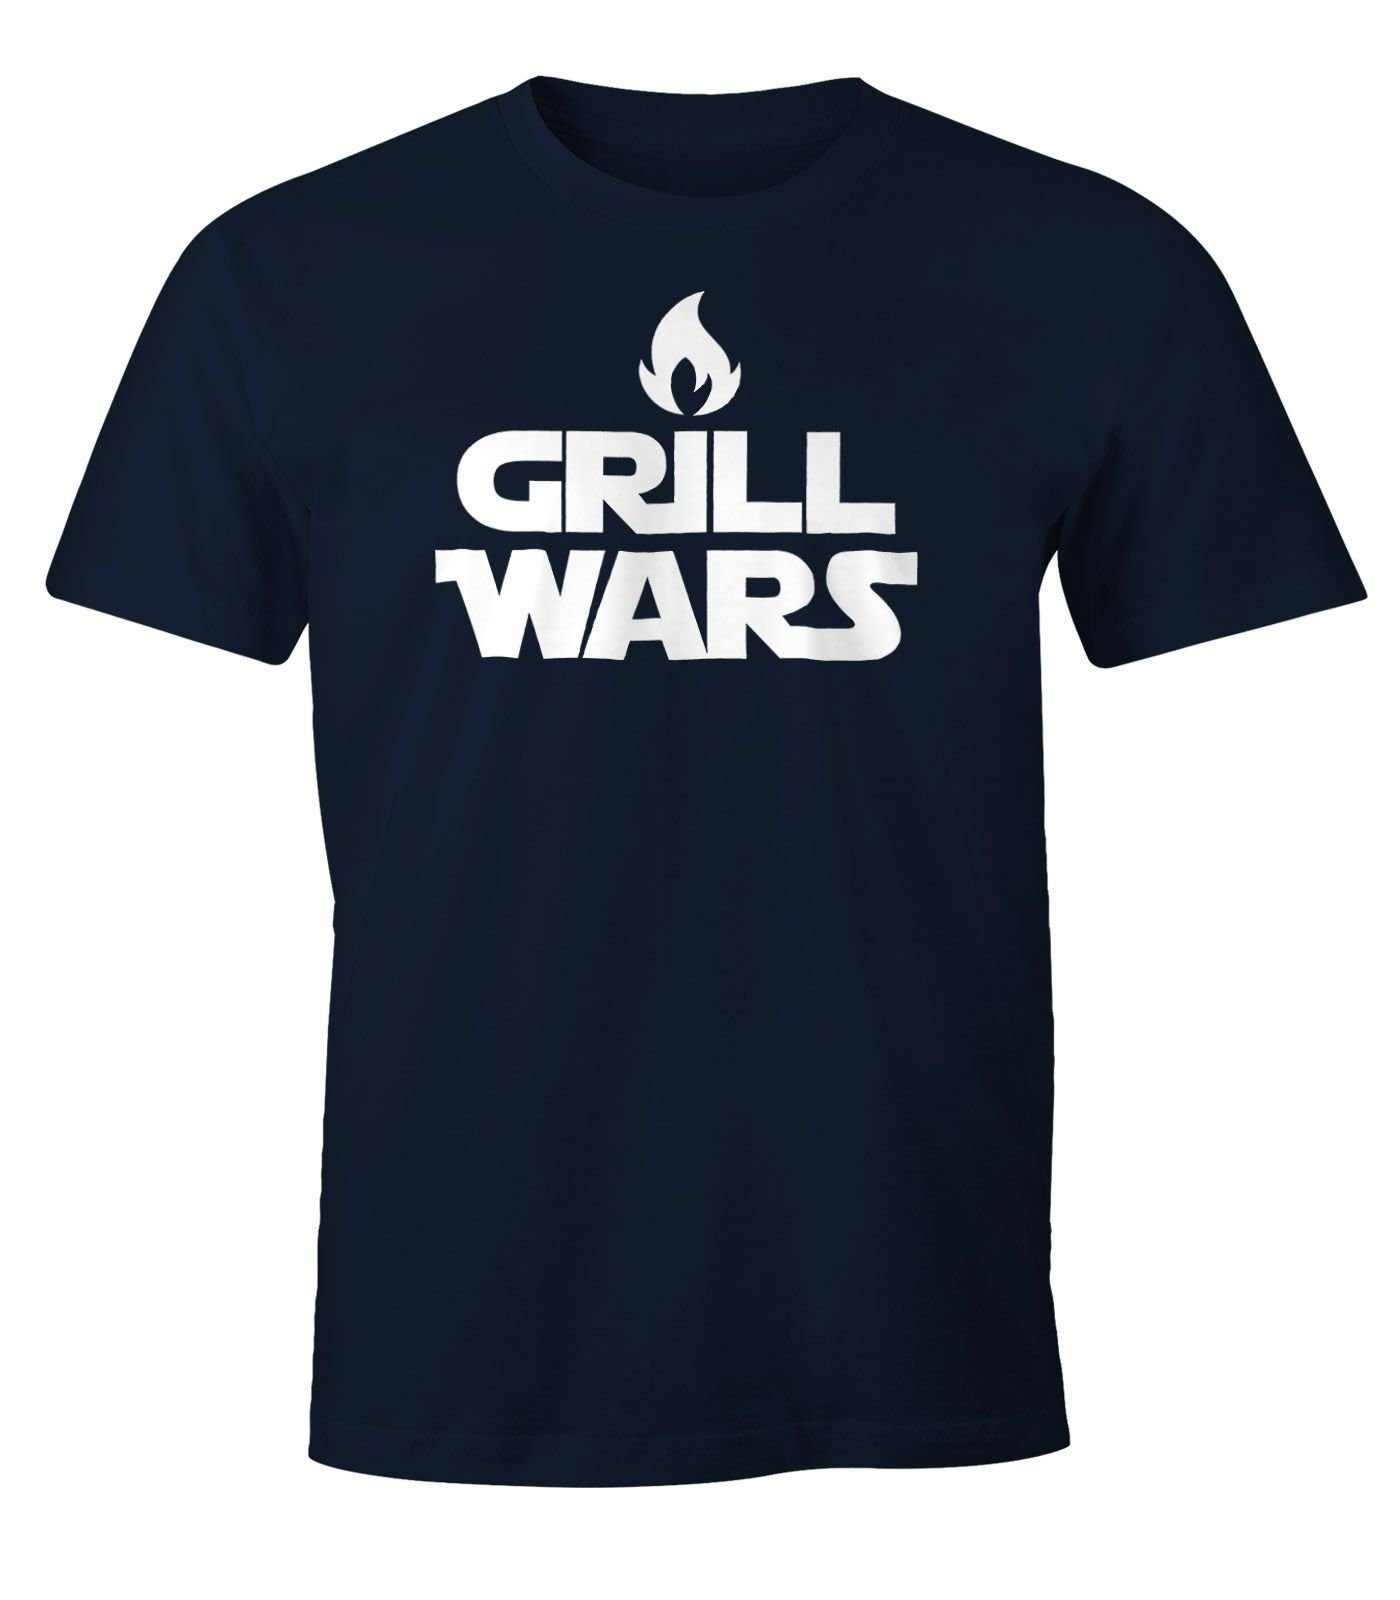 Fun-Shirt Wars Herren MoonWorks mit Print-Shirt T-Shirt Print Grill navy Moonworks®